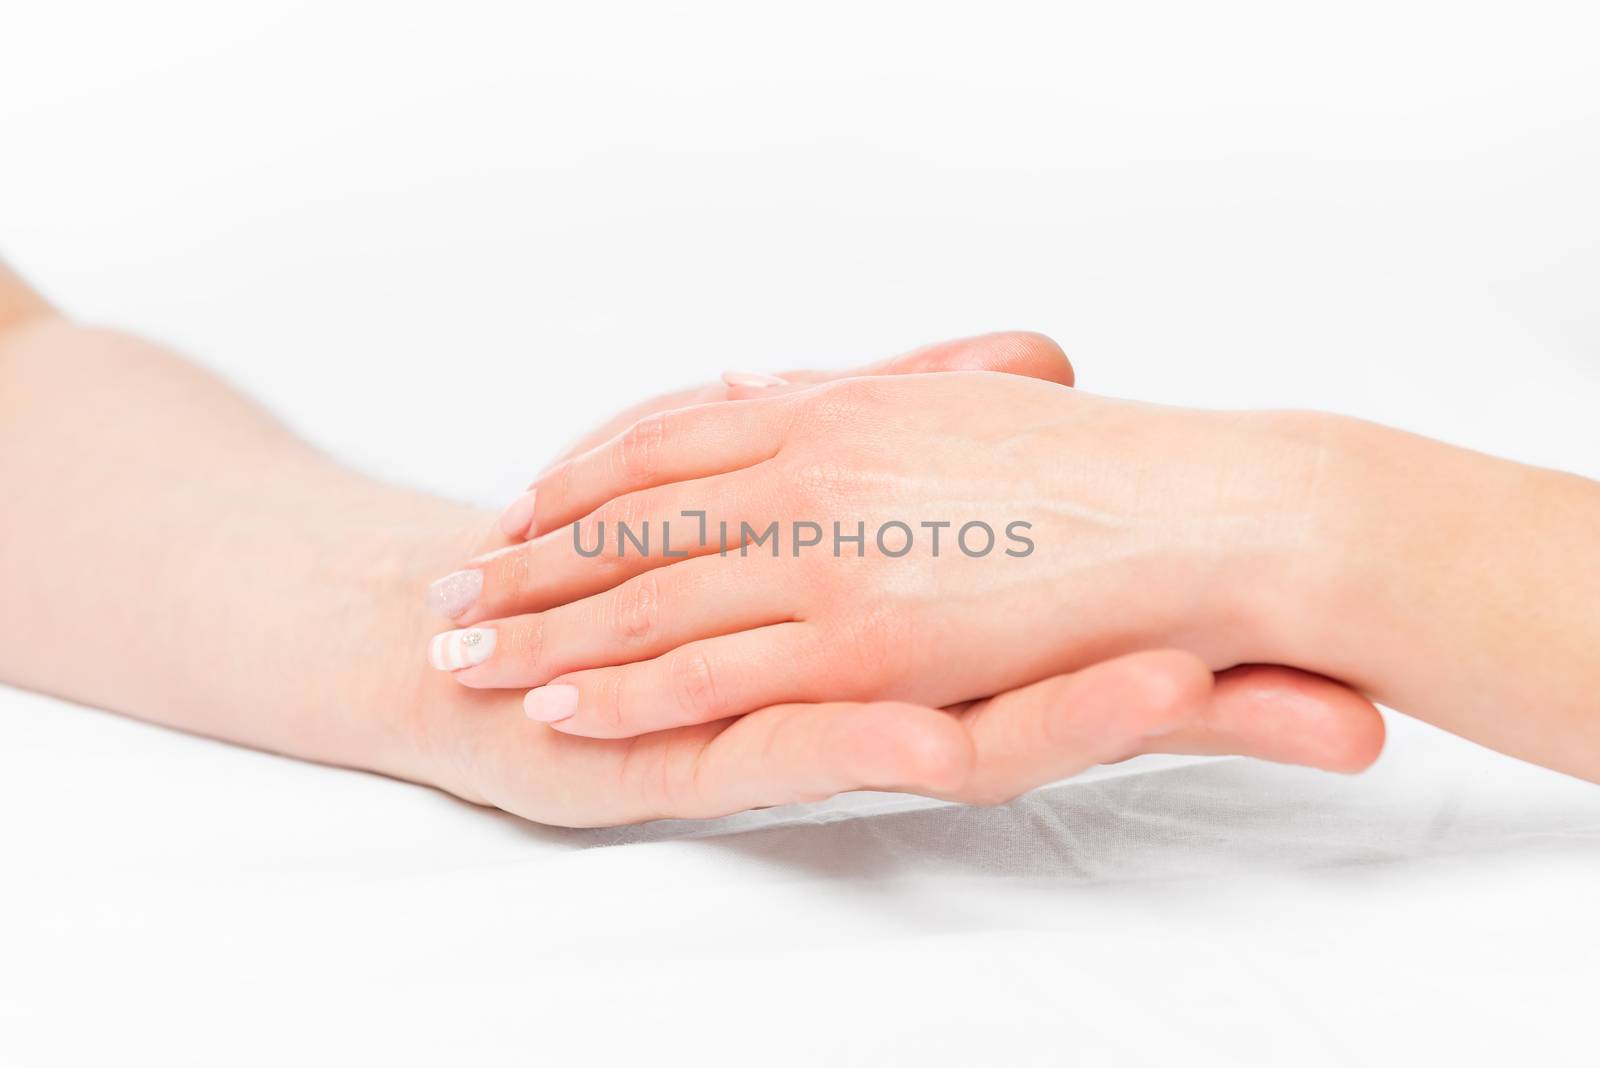 Professional hand massage in salon, close up hands